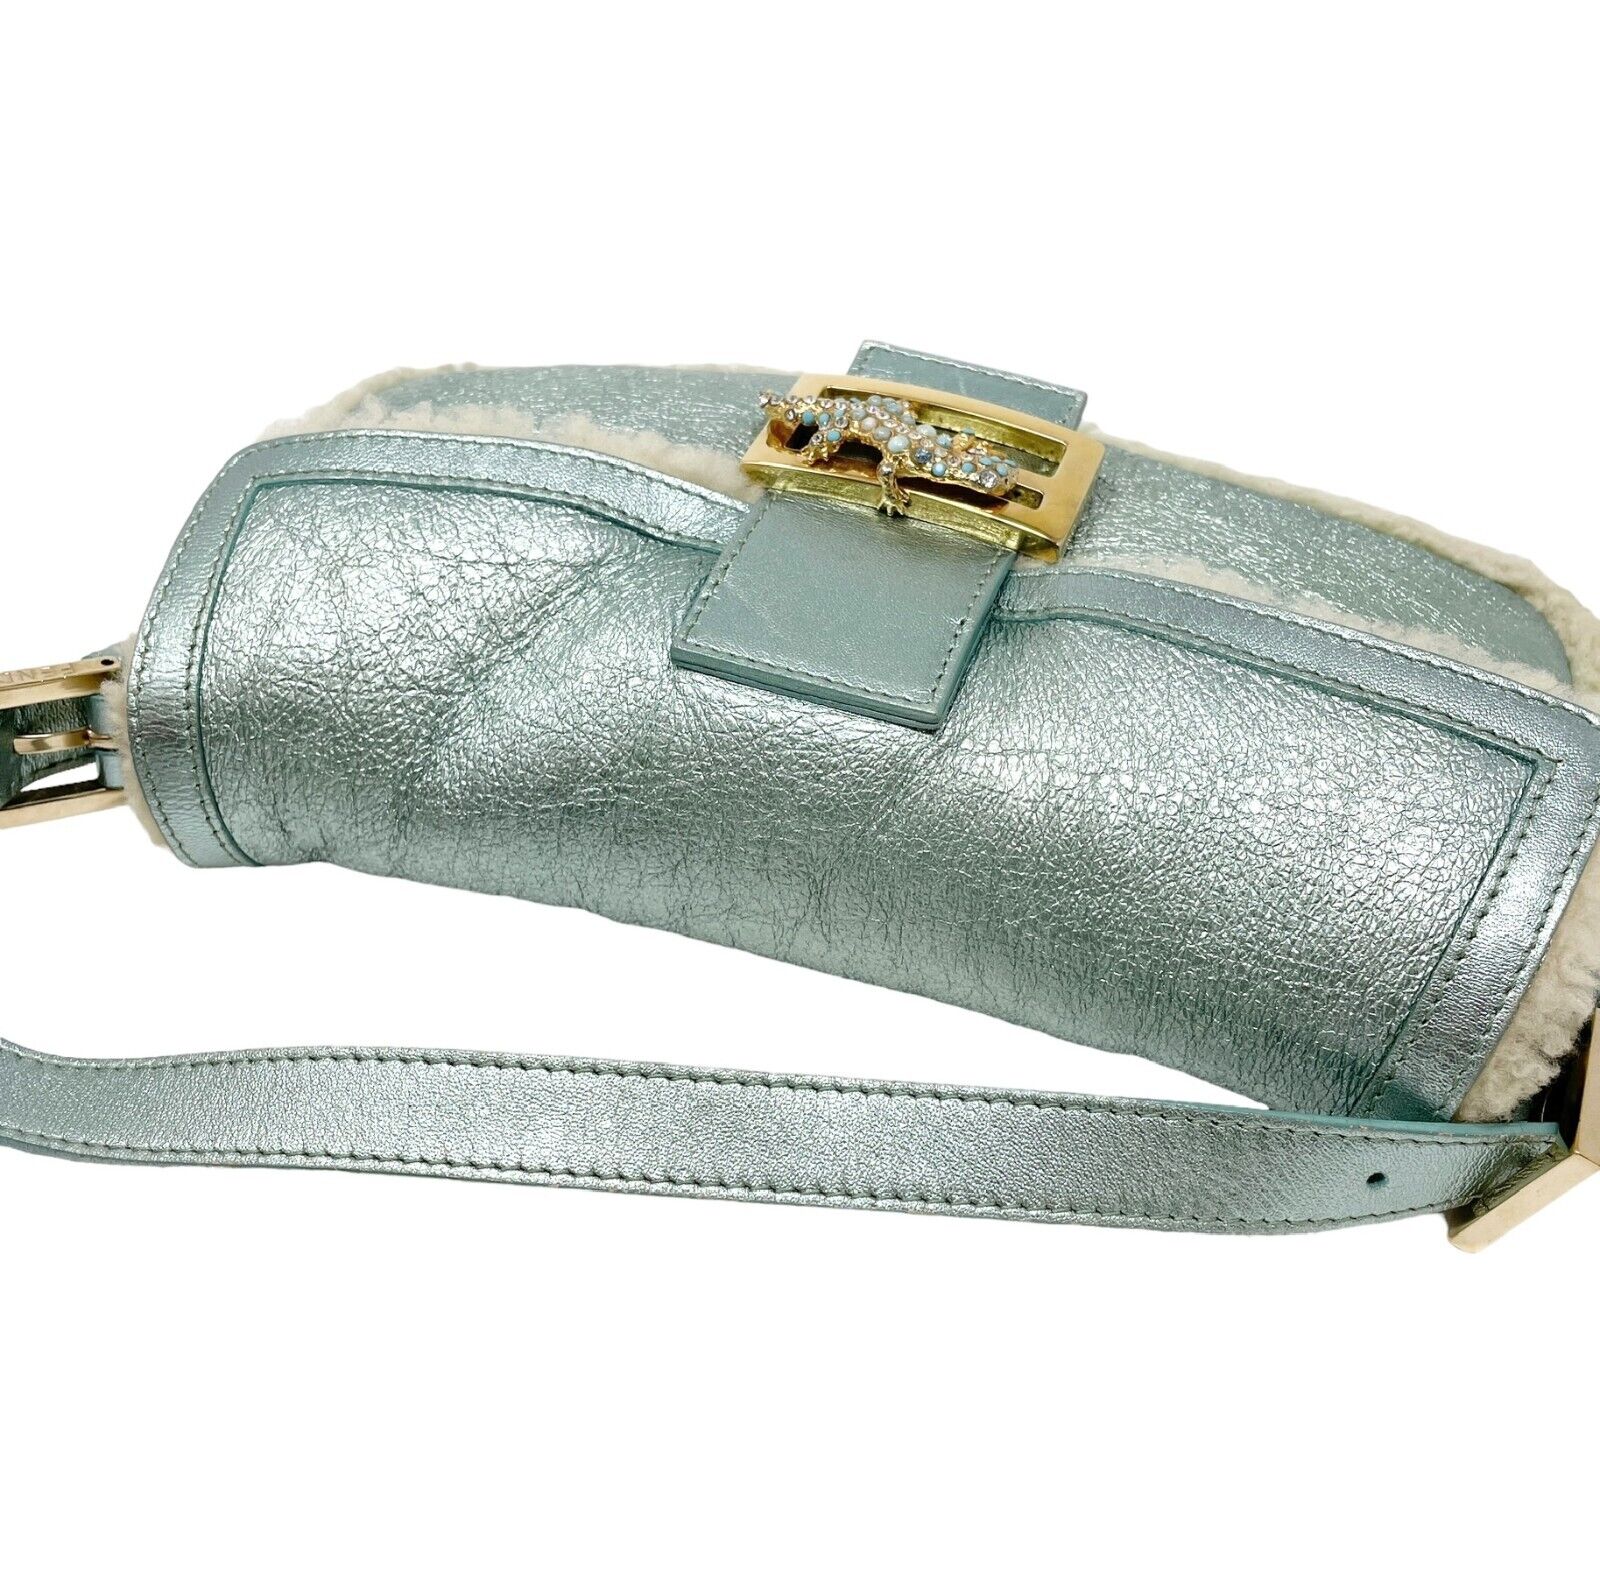 FENDI Vintage Mamma Baguette Bag Metallic Blue Gold Charm Leather Rank AB+